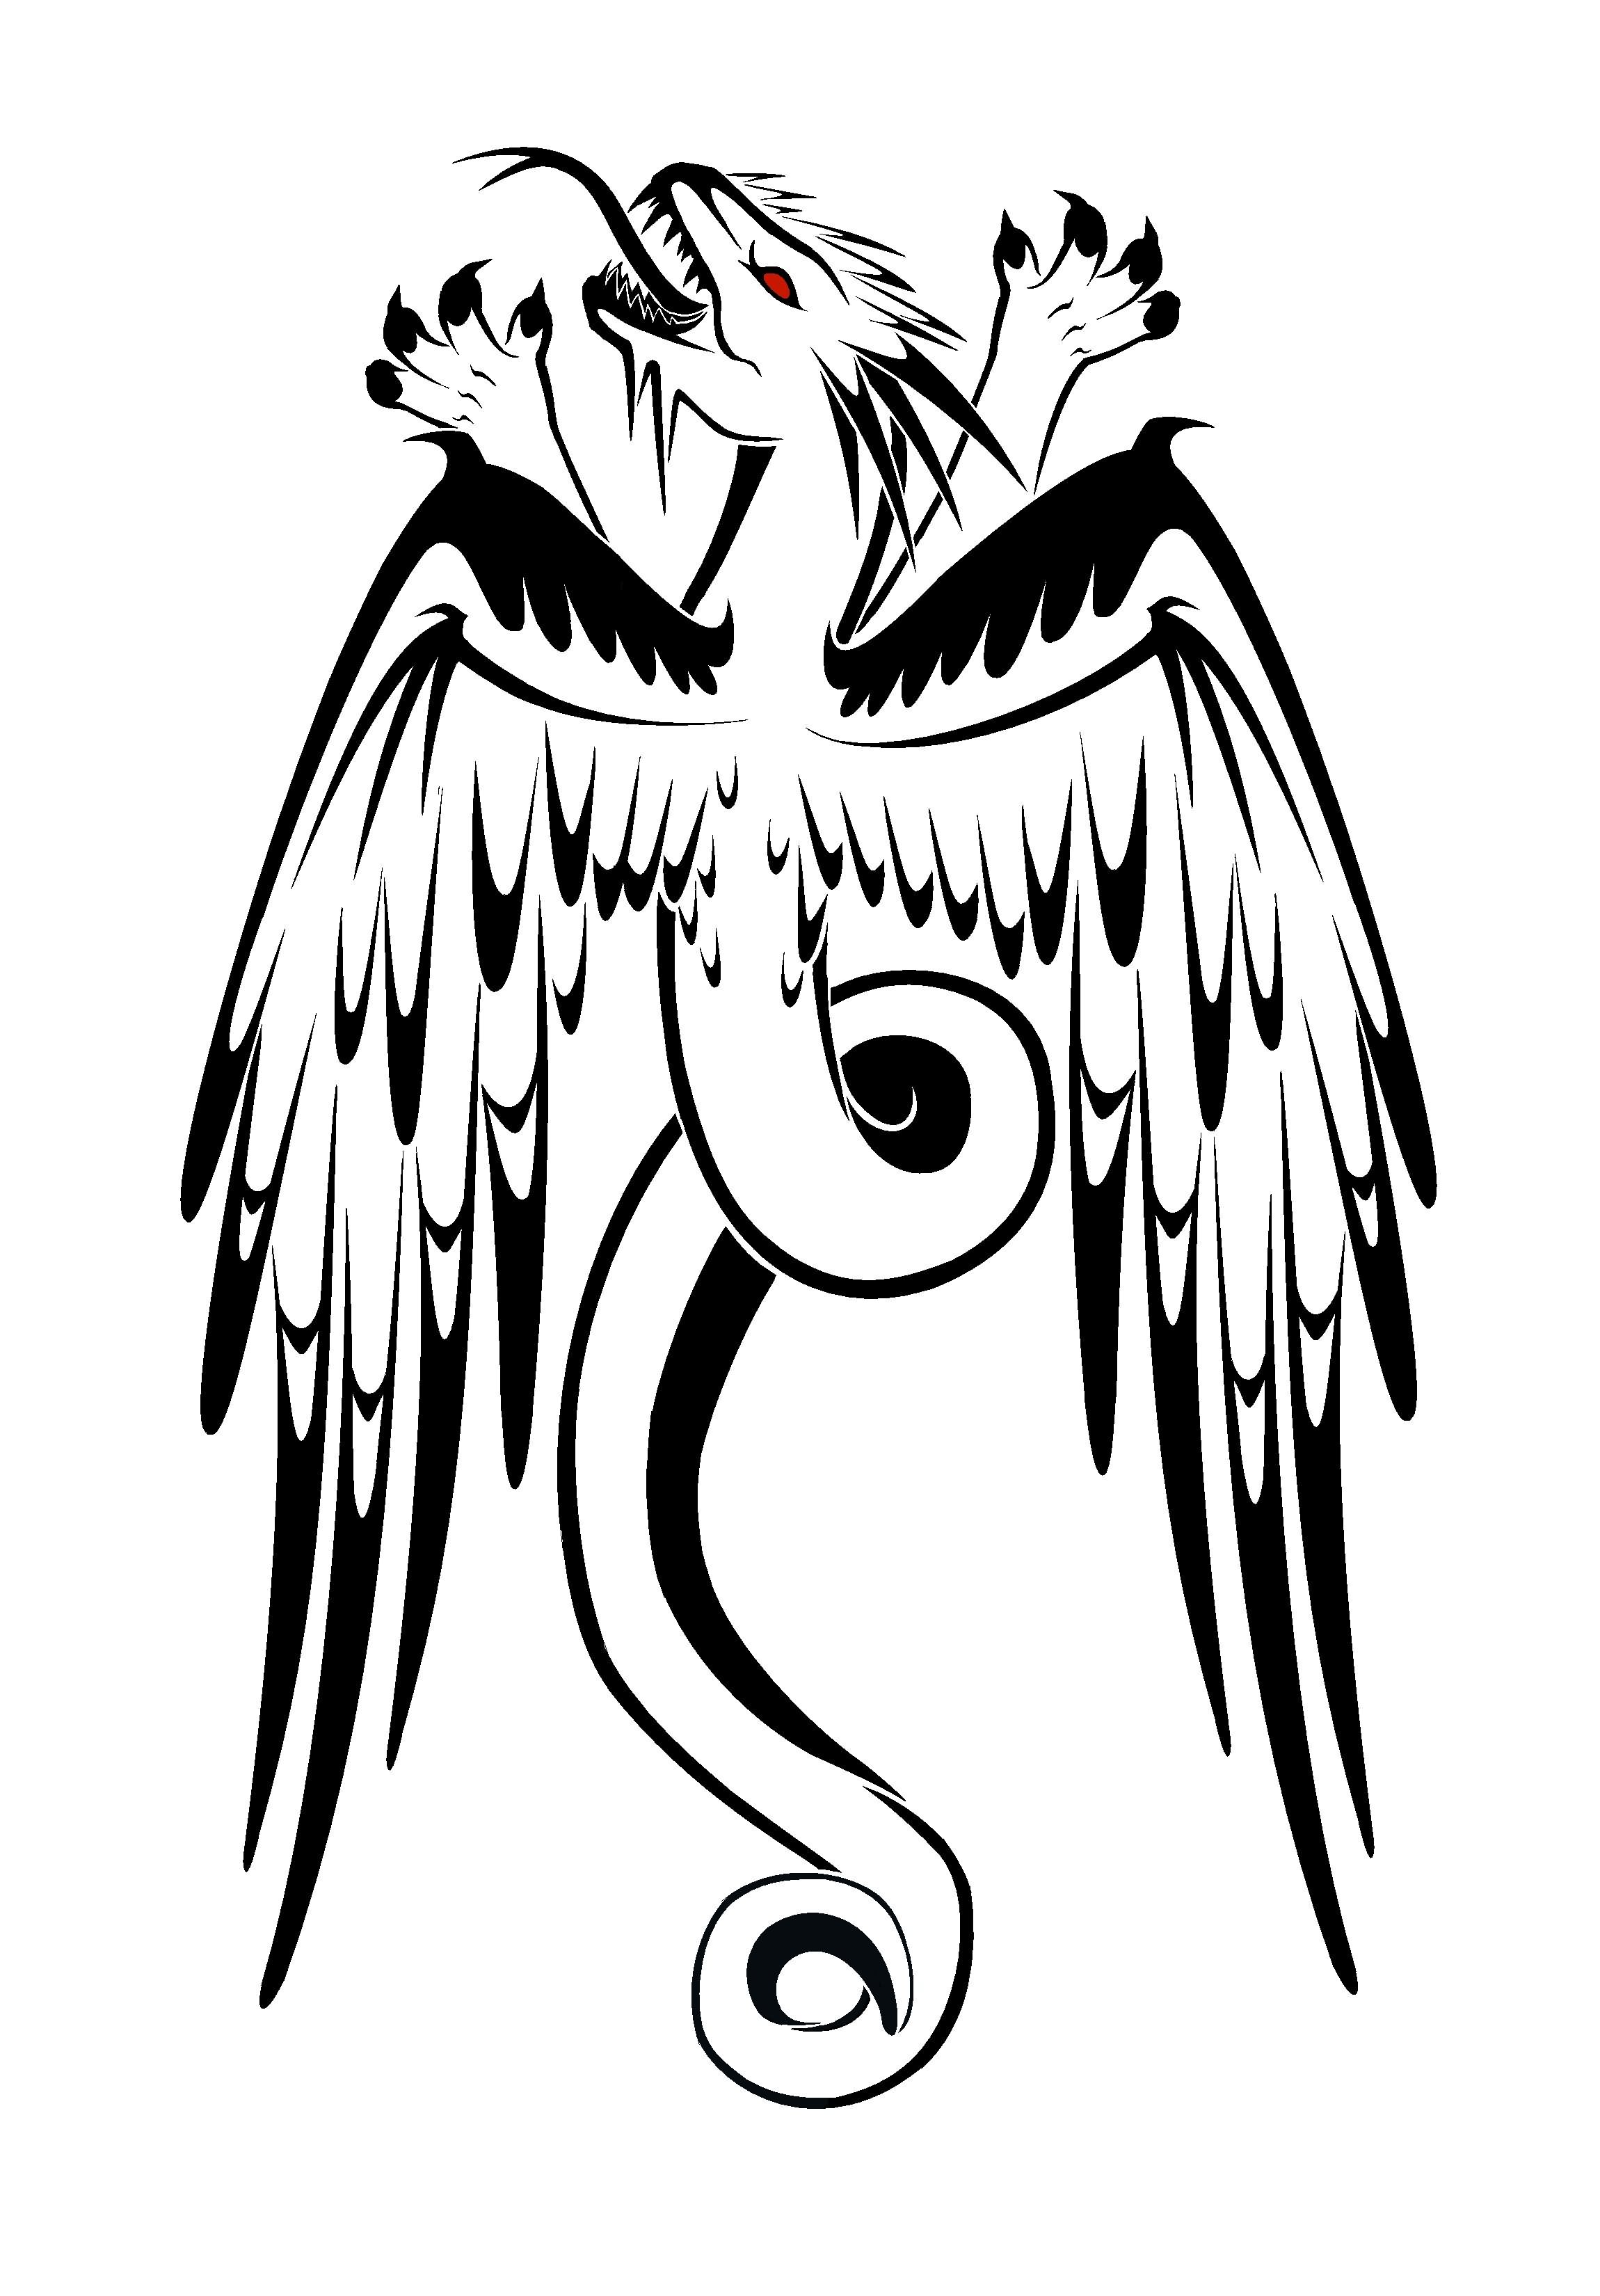 Eagle tattoo image download